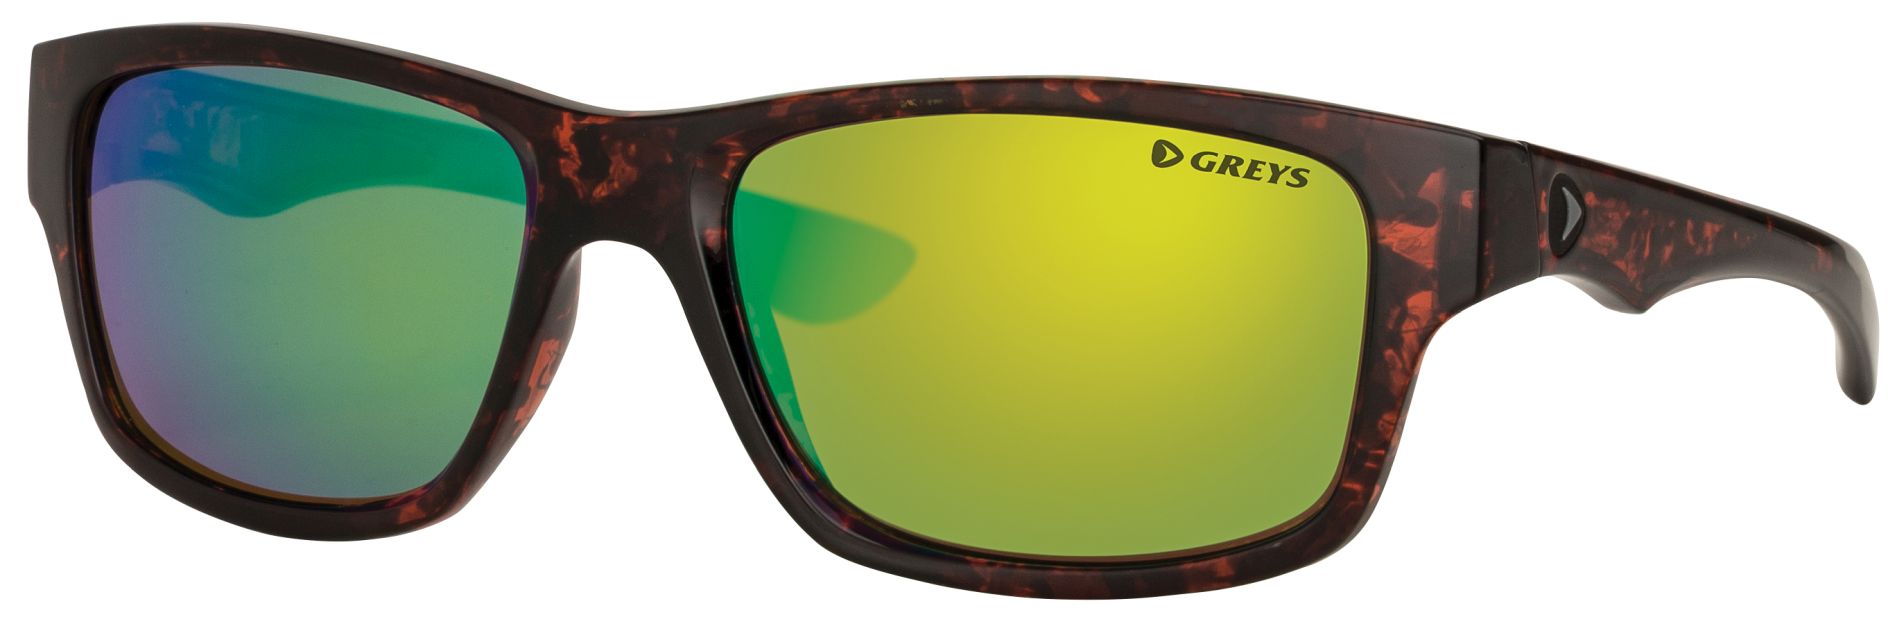 Sluneční brýle Greys G4 GLOSSTORTOISE/GRN MIRROR